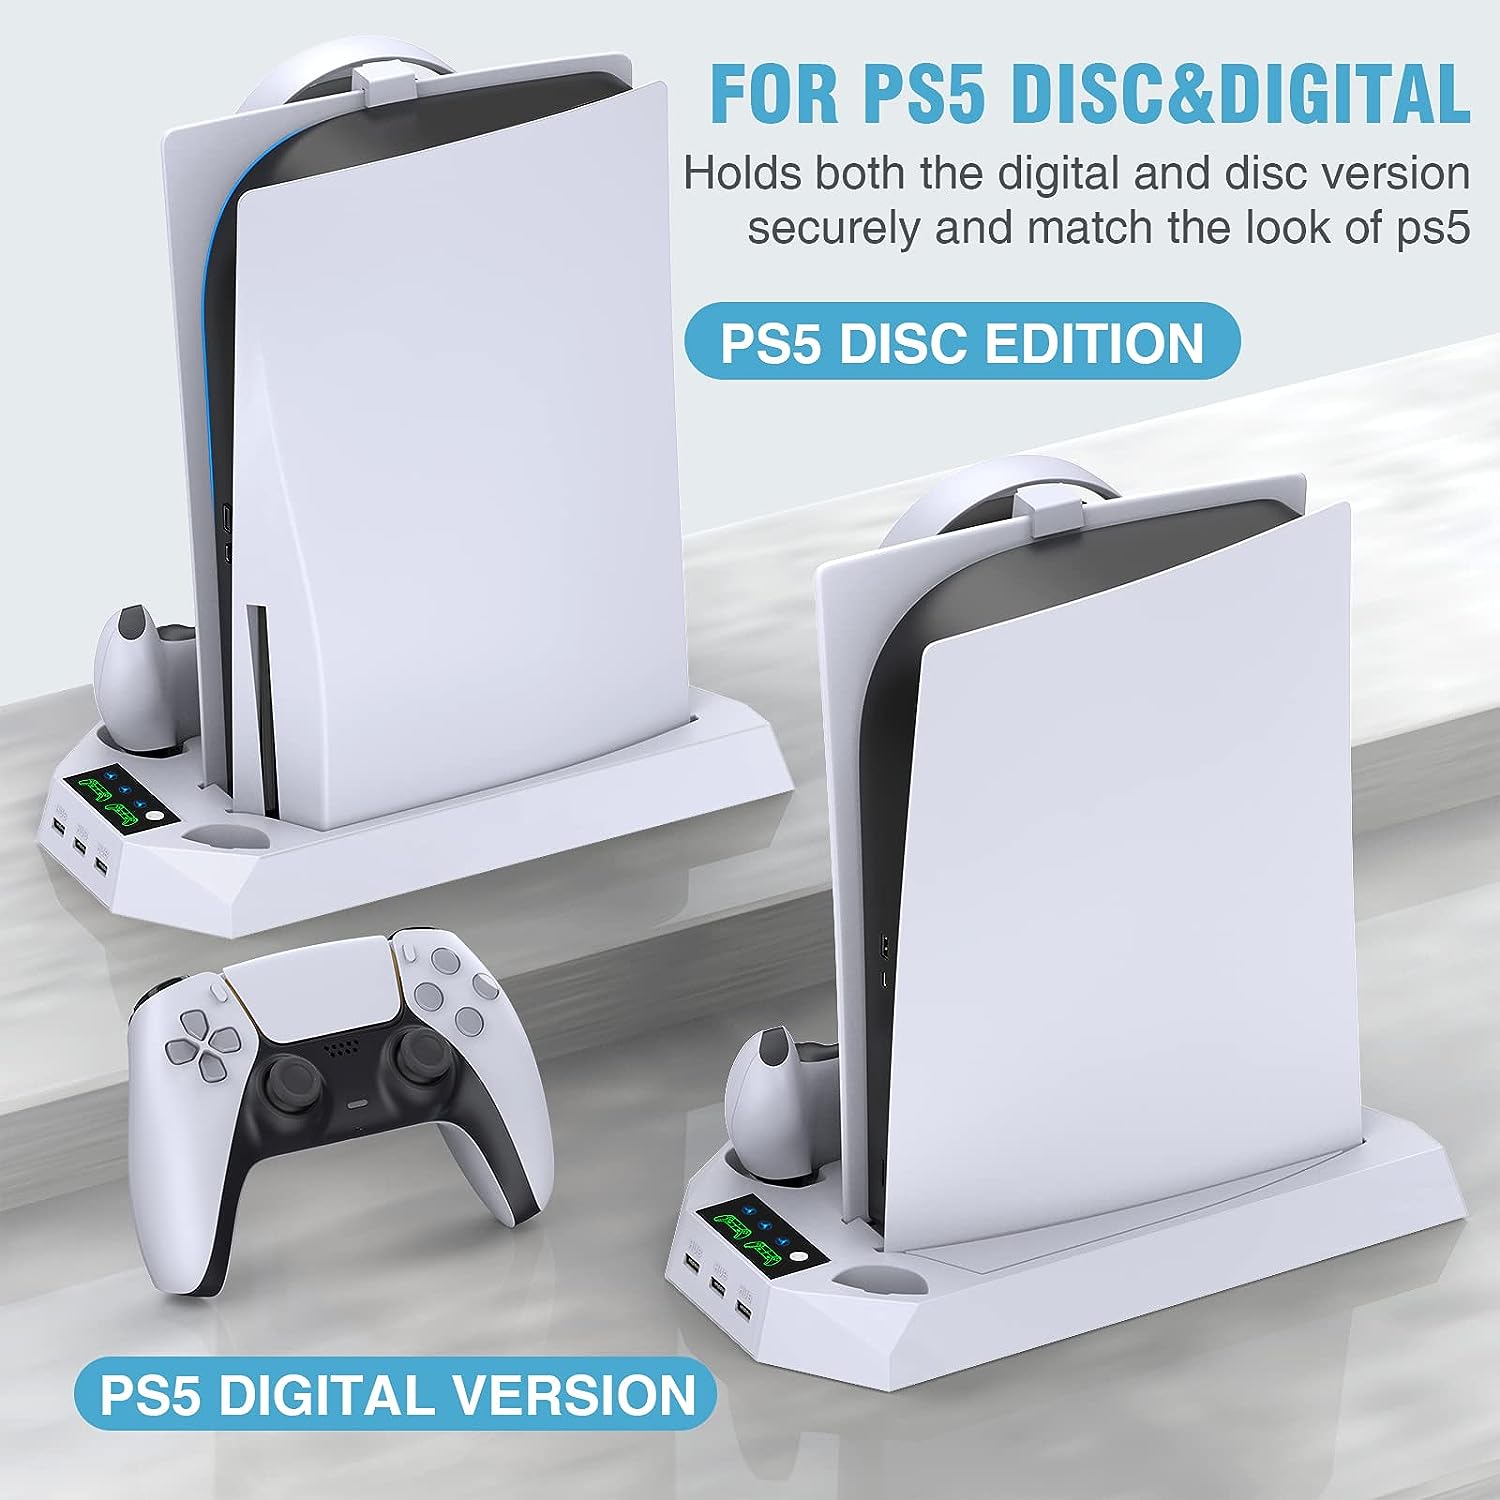 Sony Base de carga PlayStation 5 DualSense para la PS5, carga hasta 2  controles inalámbricos